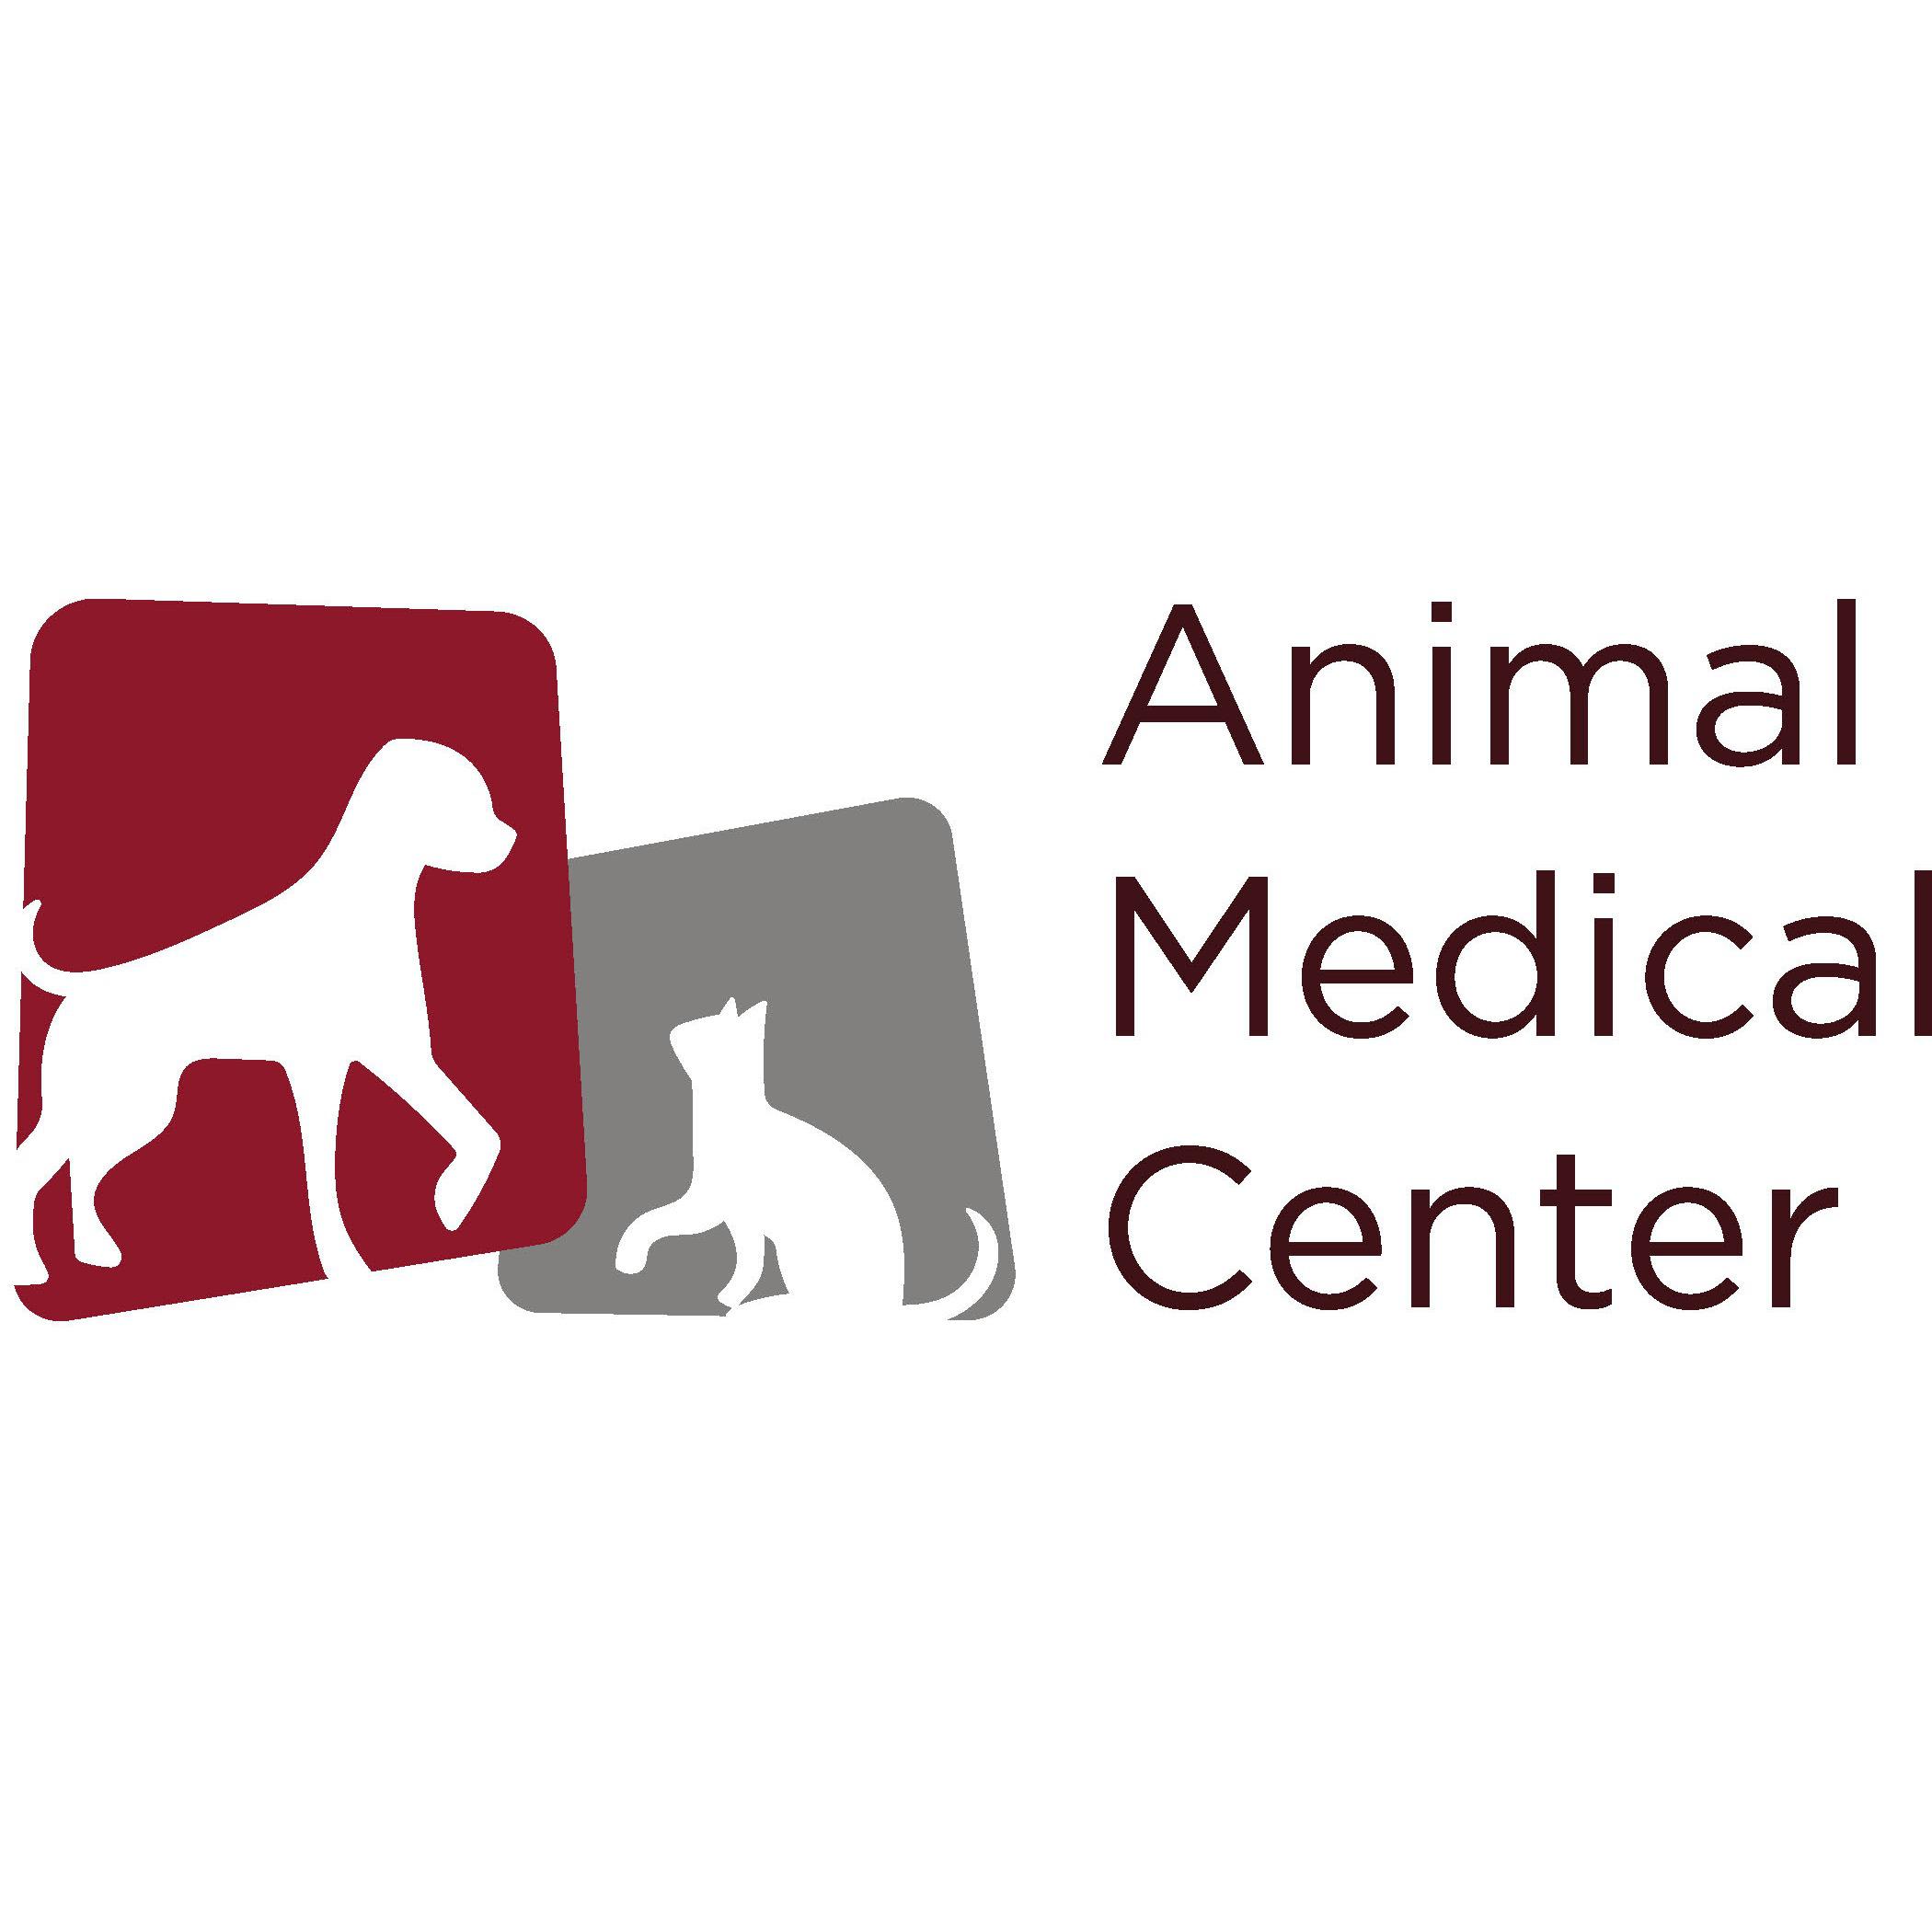 Animal Medical Center - Murfreesboro, TN 37128 - (615)867-7575 | ShowMeLocal.com